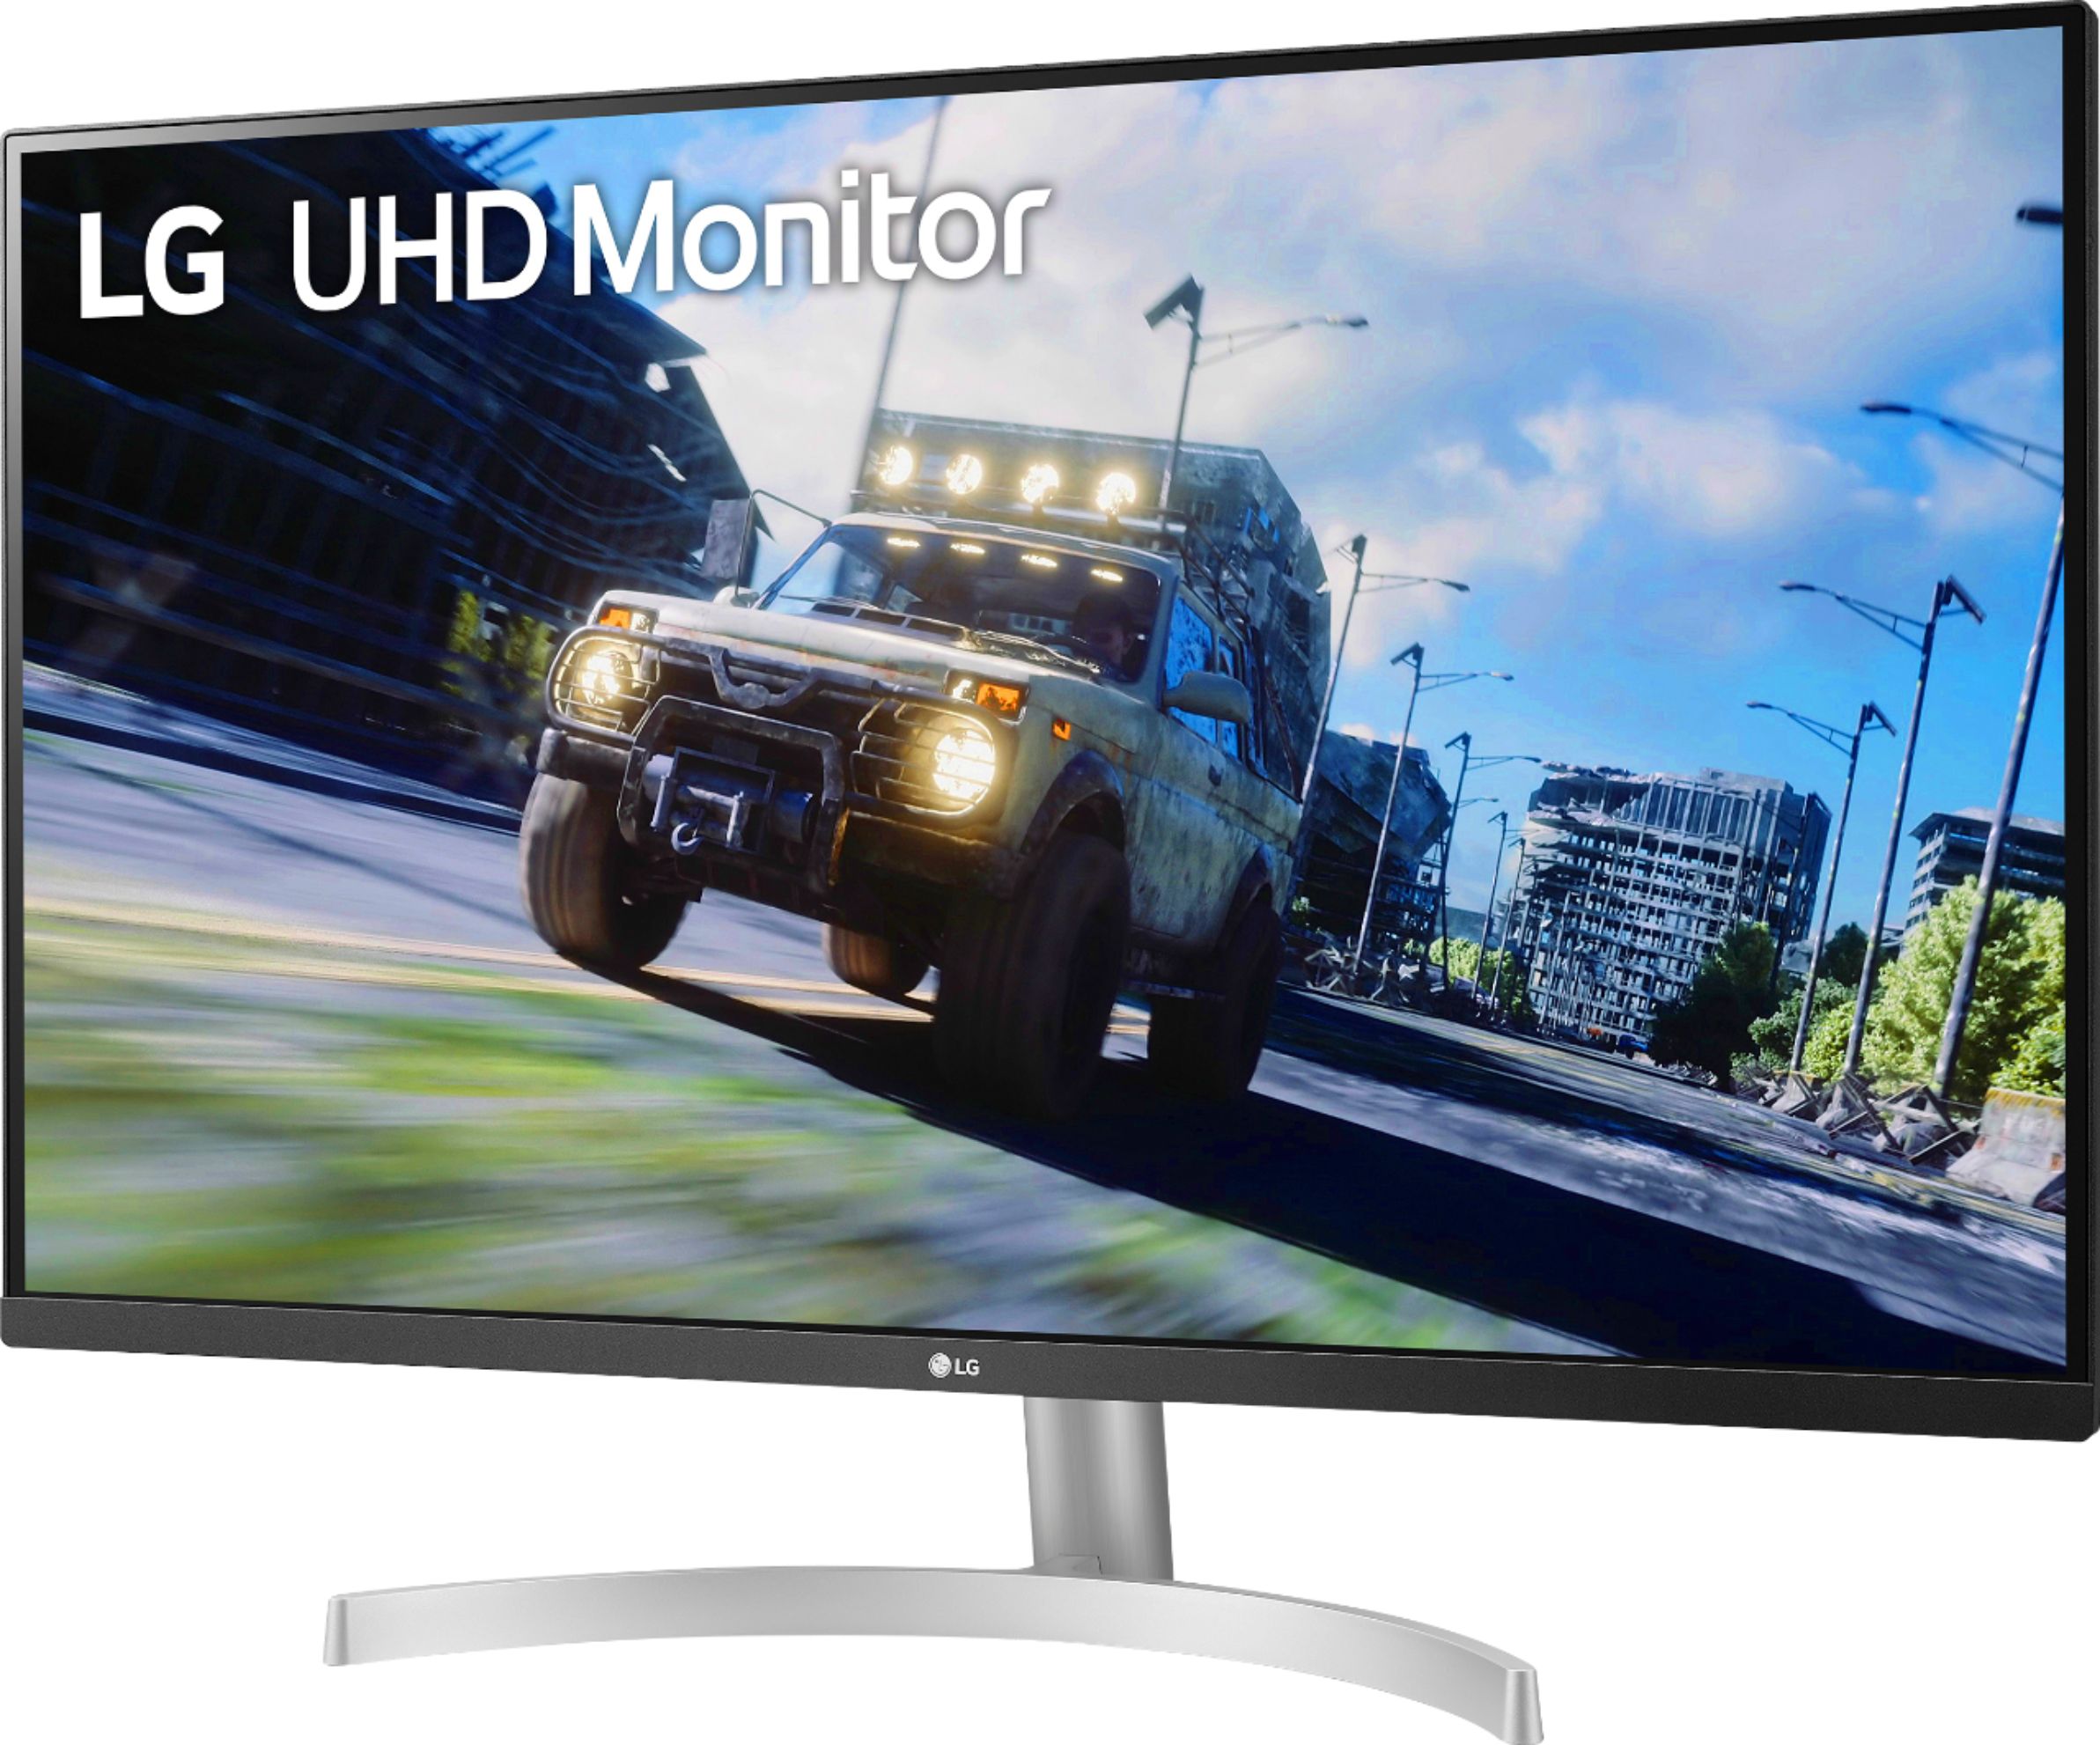 Left View: LG - 27" IPS HDR UHD 4K Monitor - Black